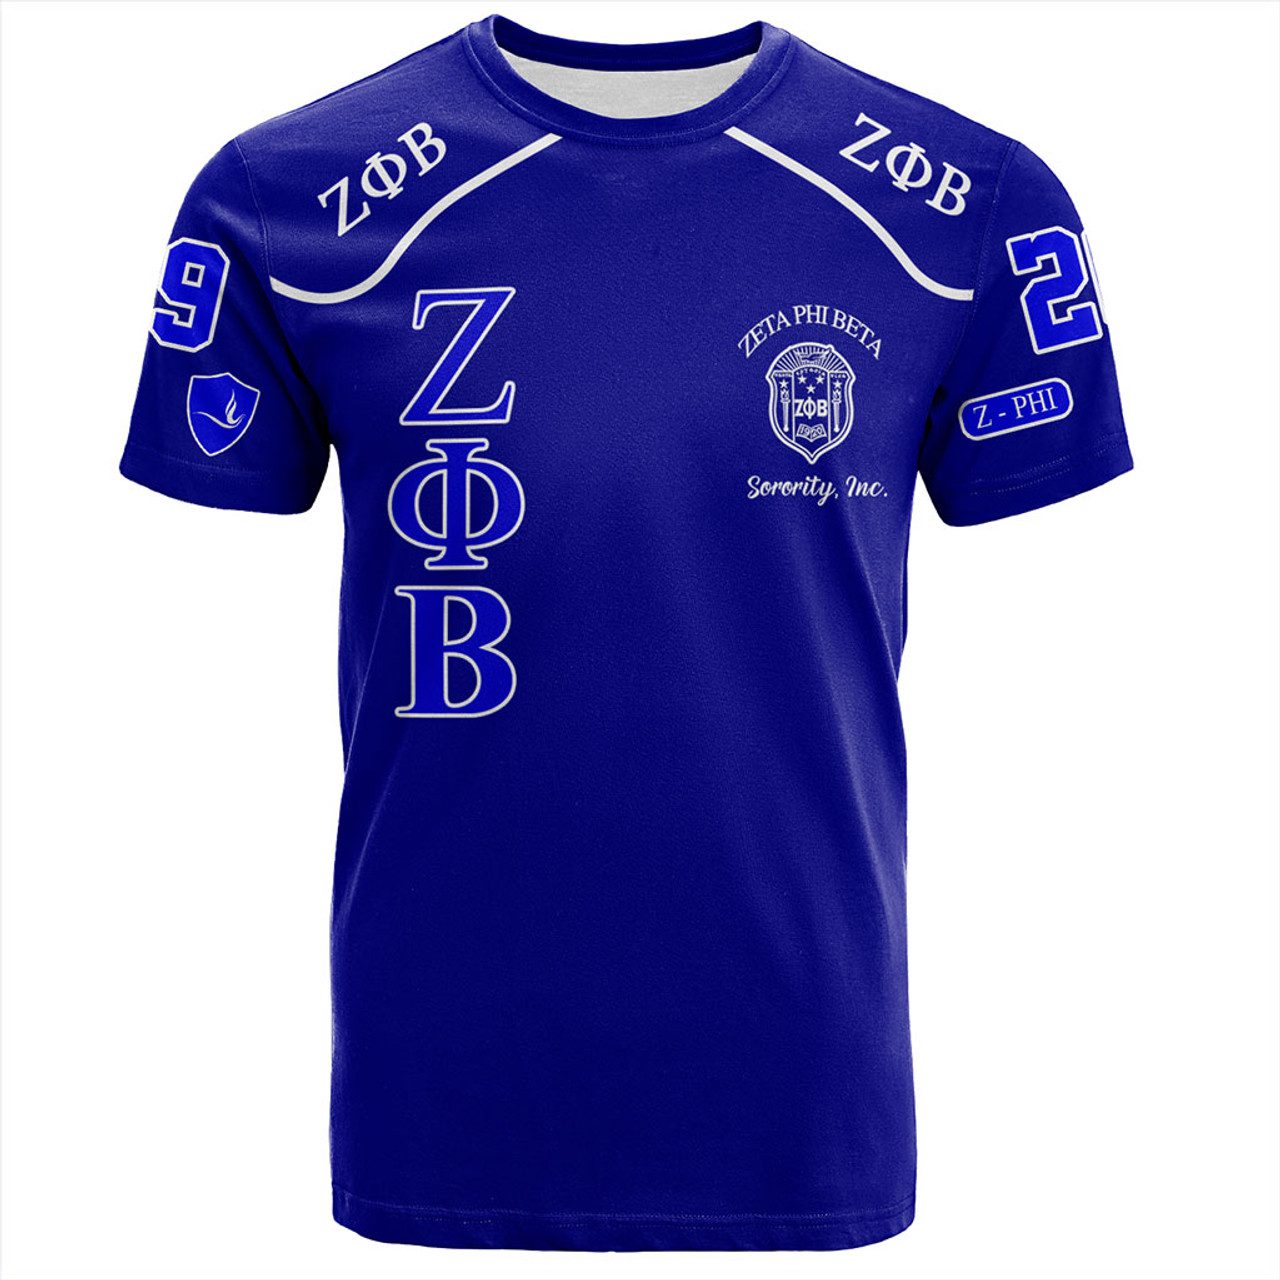 Zeta Phi Beta T-Shirt Greek Sorority Style